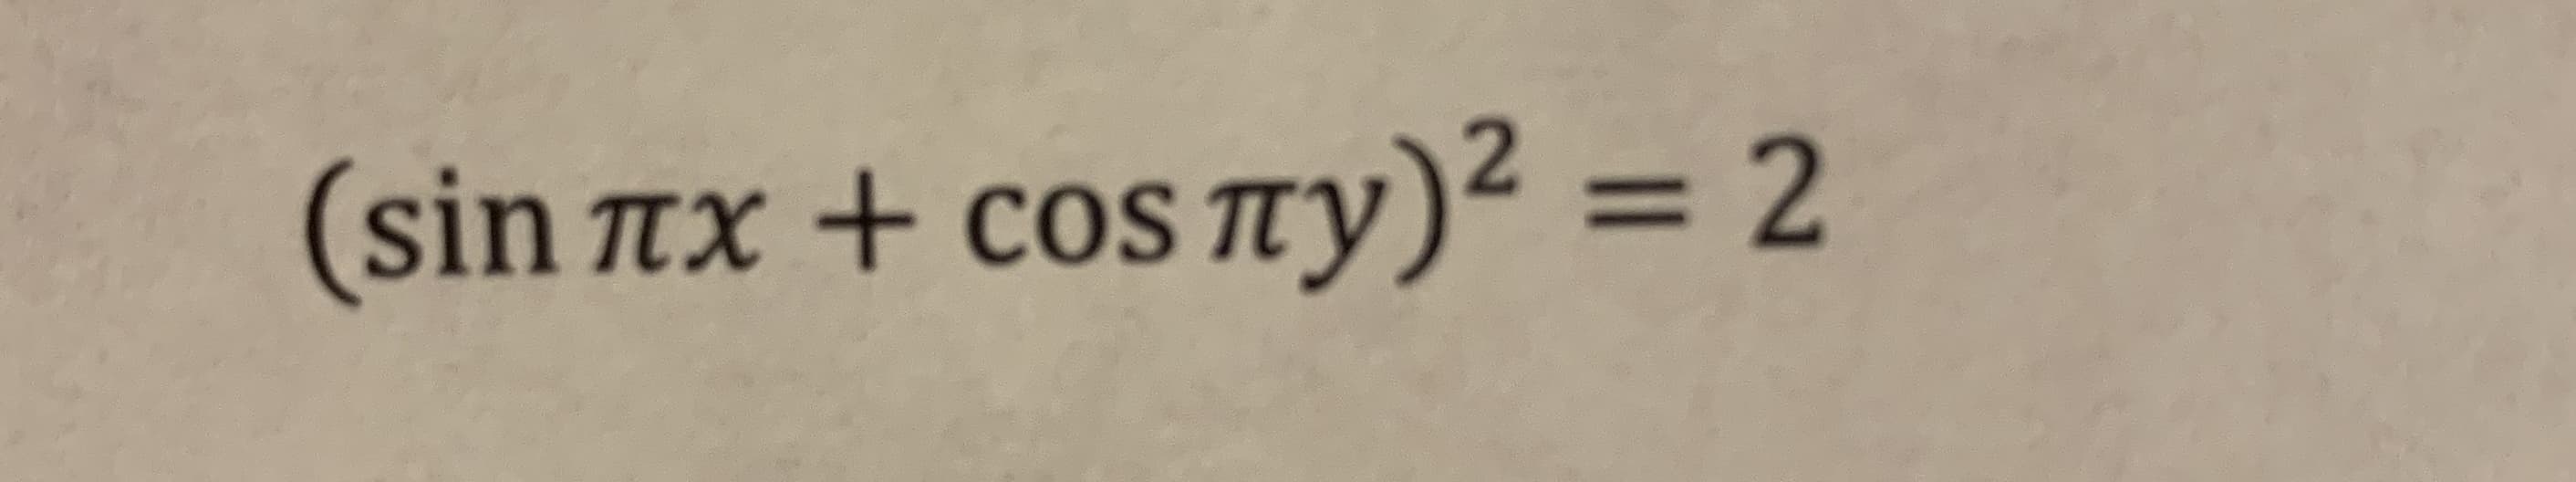 (sin Tx + cos Ty)² = 2
